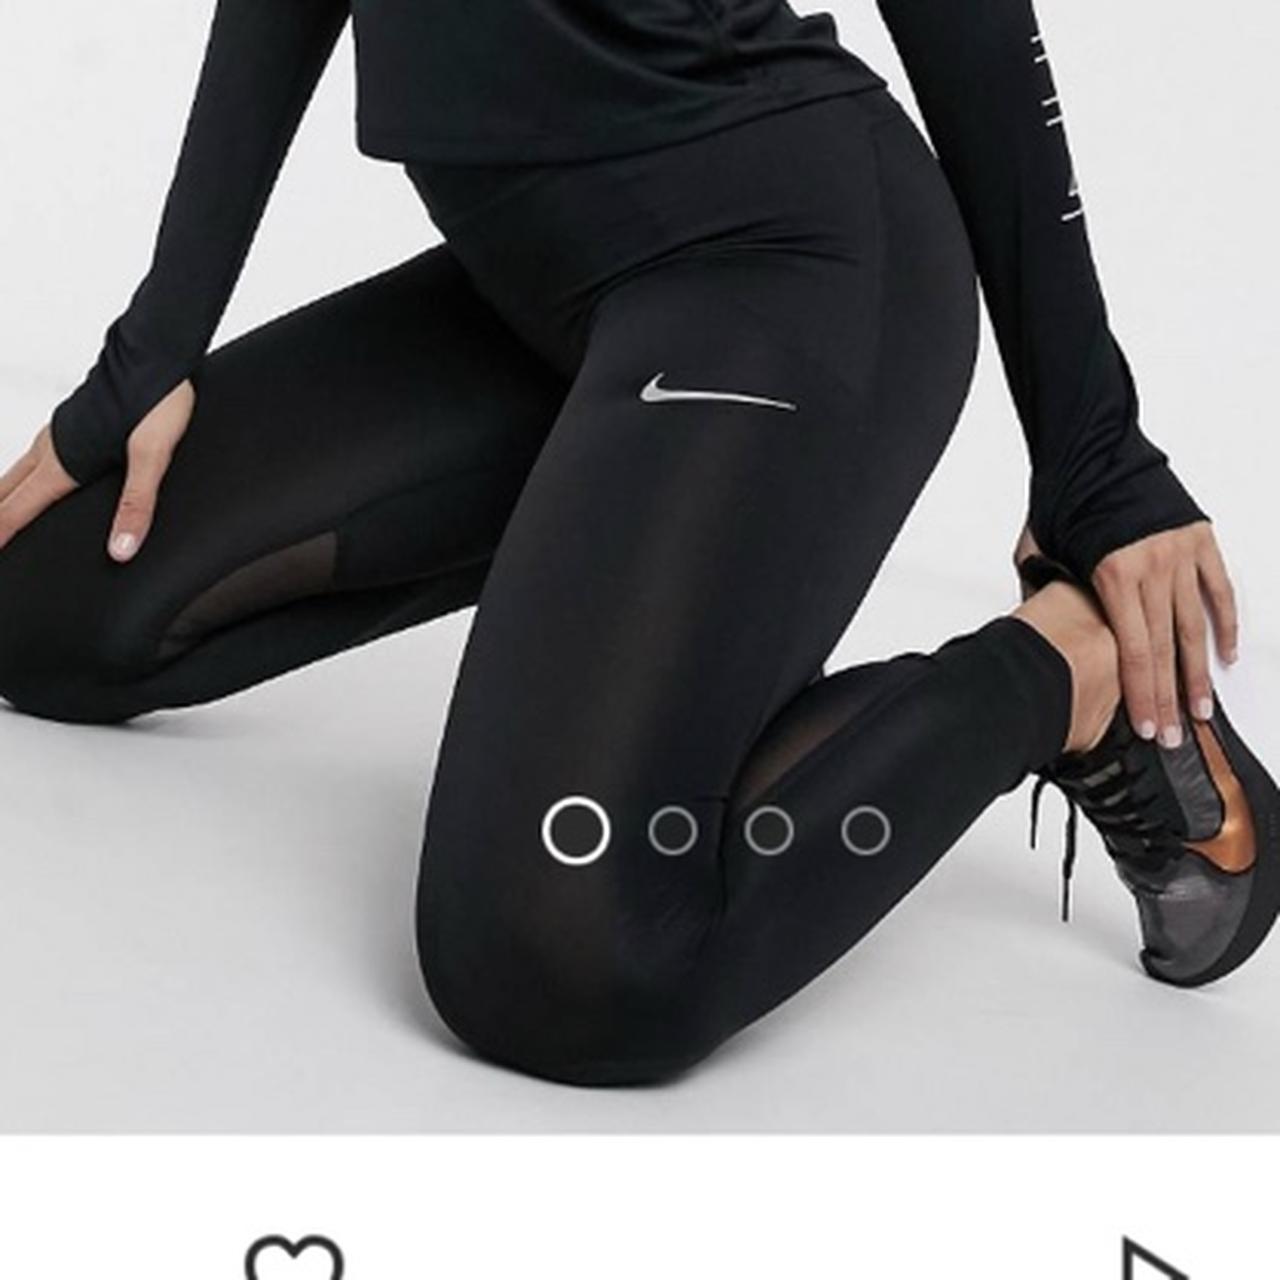 Nike Running Fast Tight leggings in black